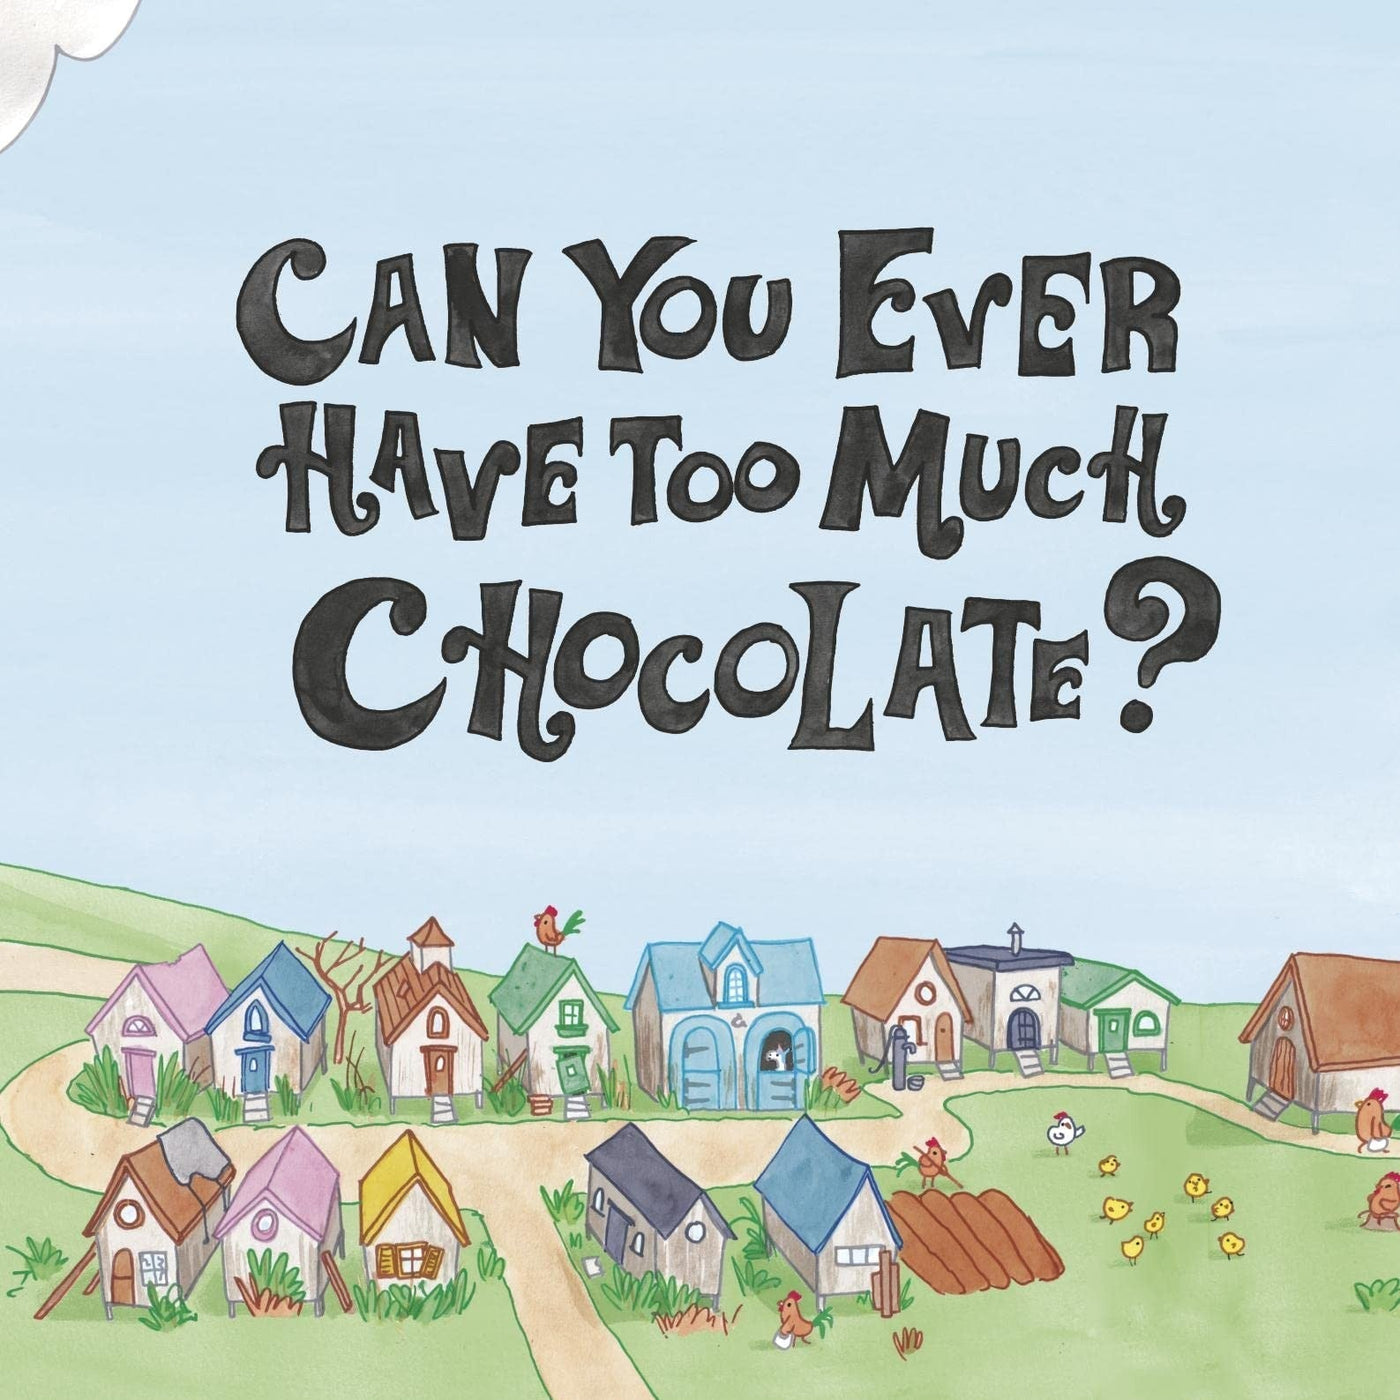 Mayor Bunny's Chocolate Town